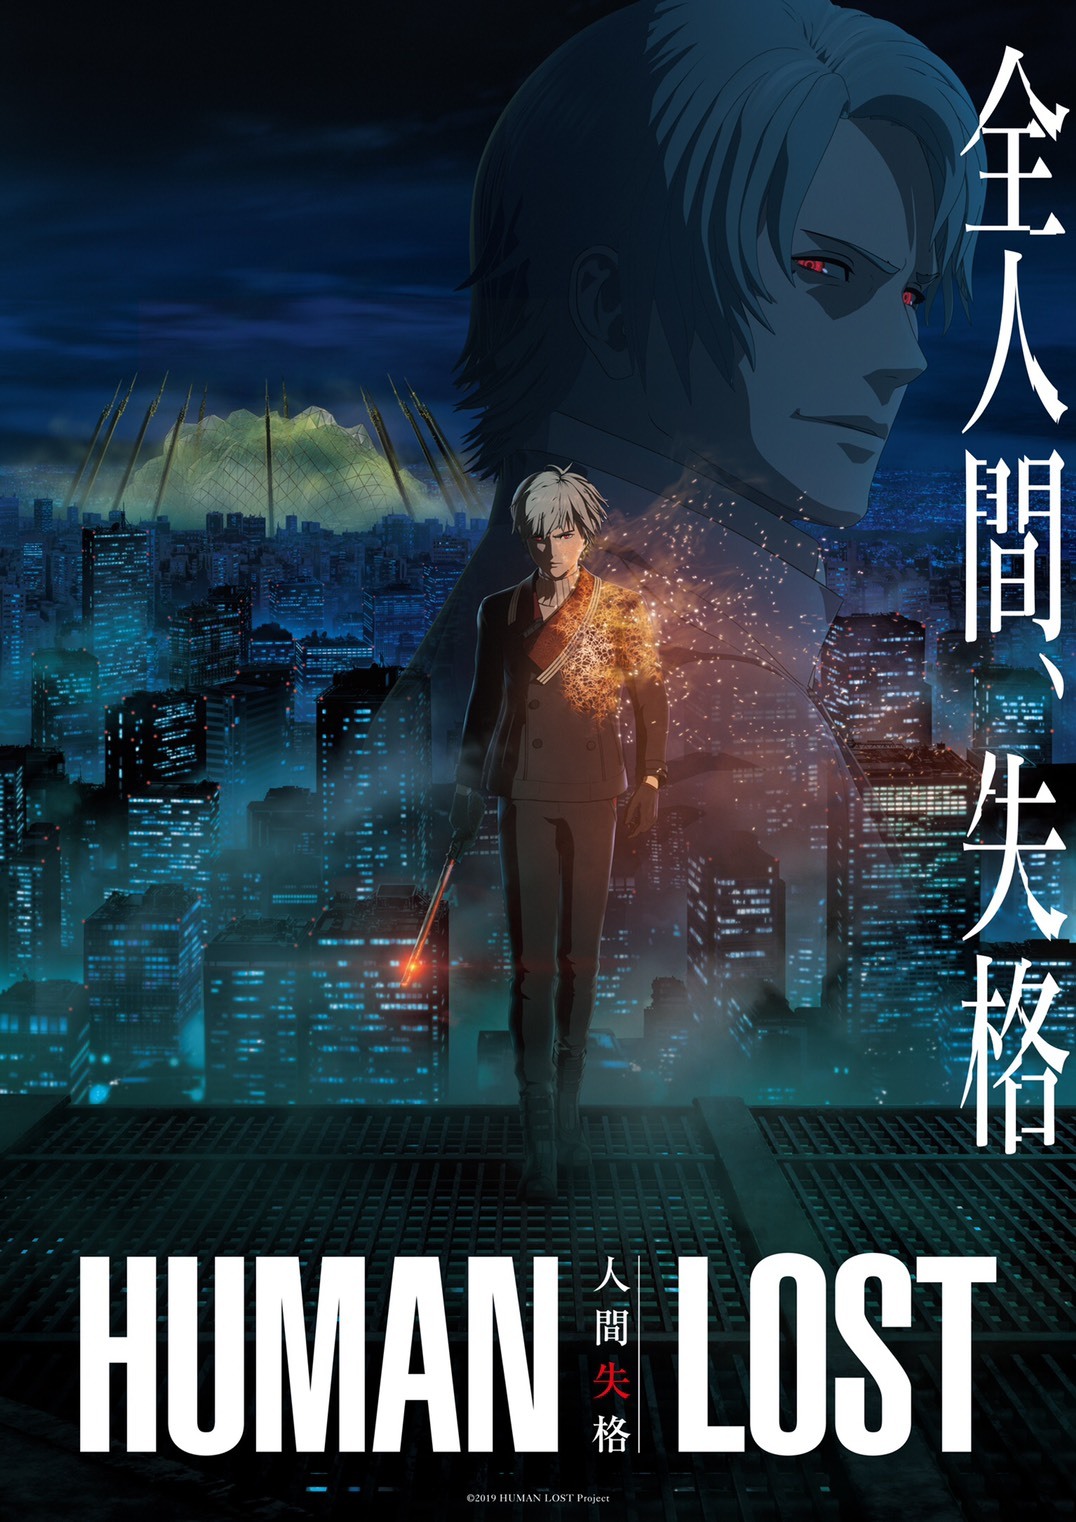 『HUMAN LOST 人間失格』キービジュアル (C)2019 HUMAN LOST Project